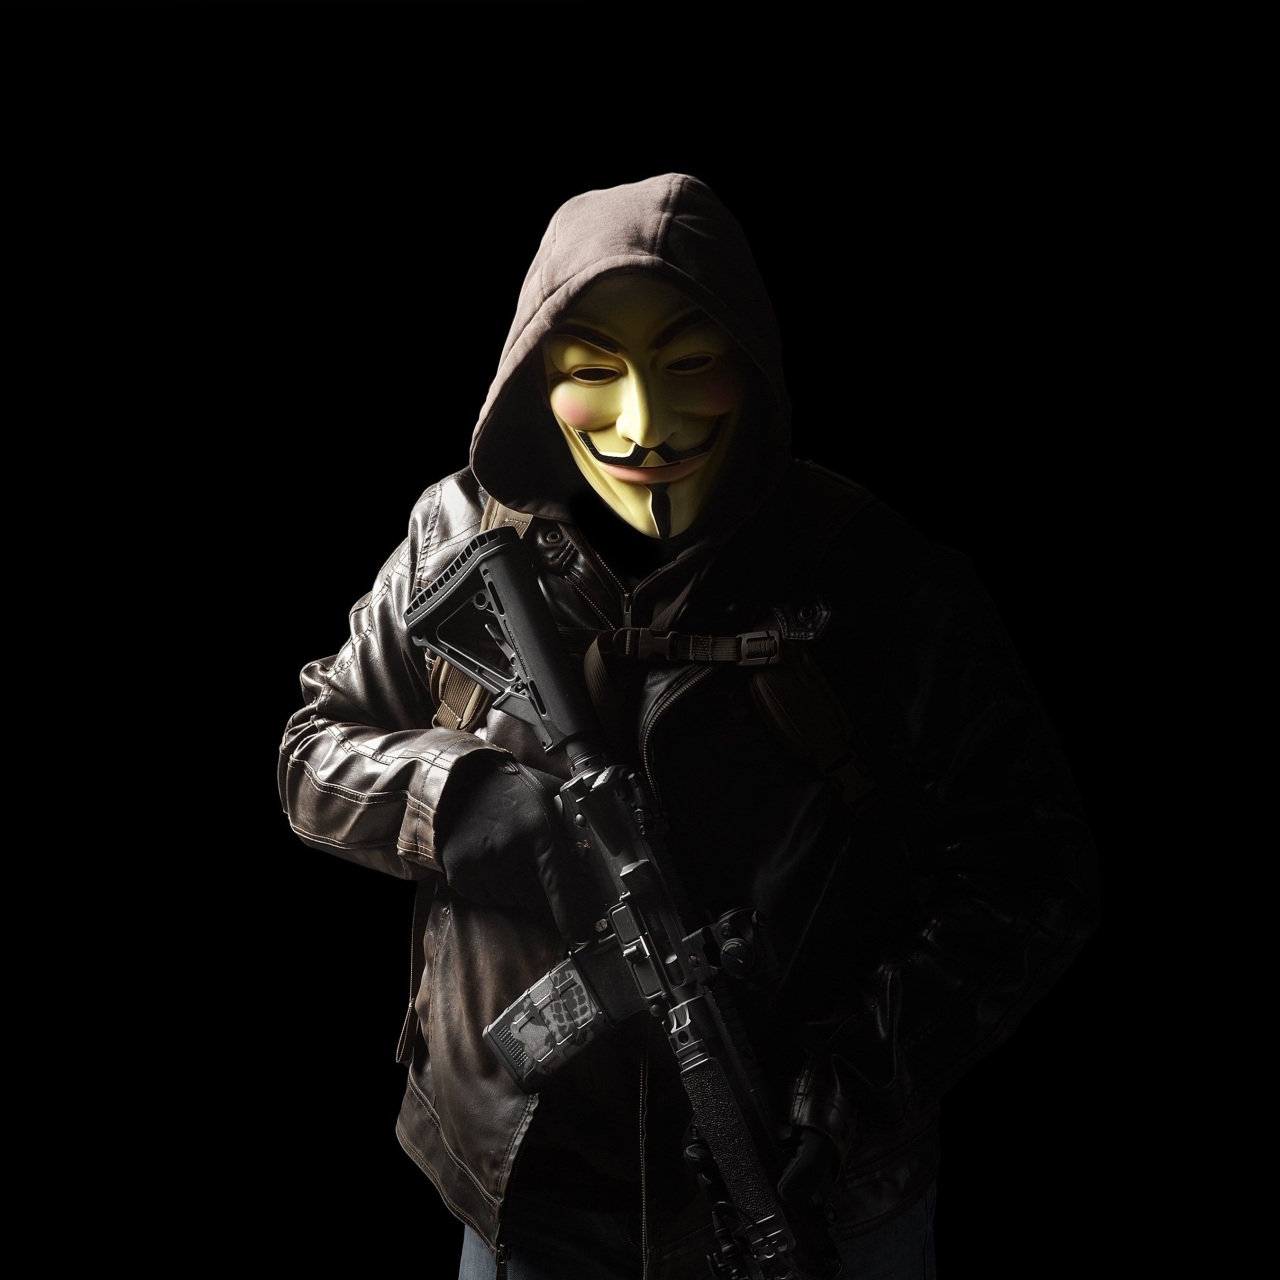 Wallpaper 4k Anonymous Mask Person With Gun Wallpaper